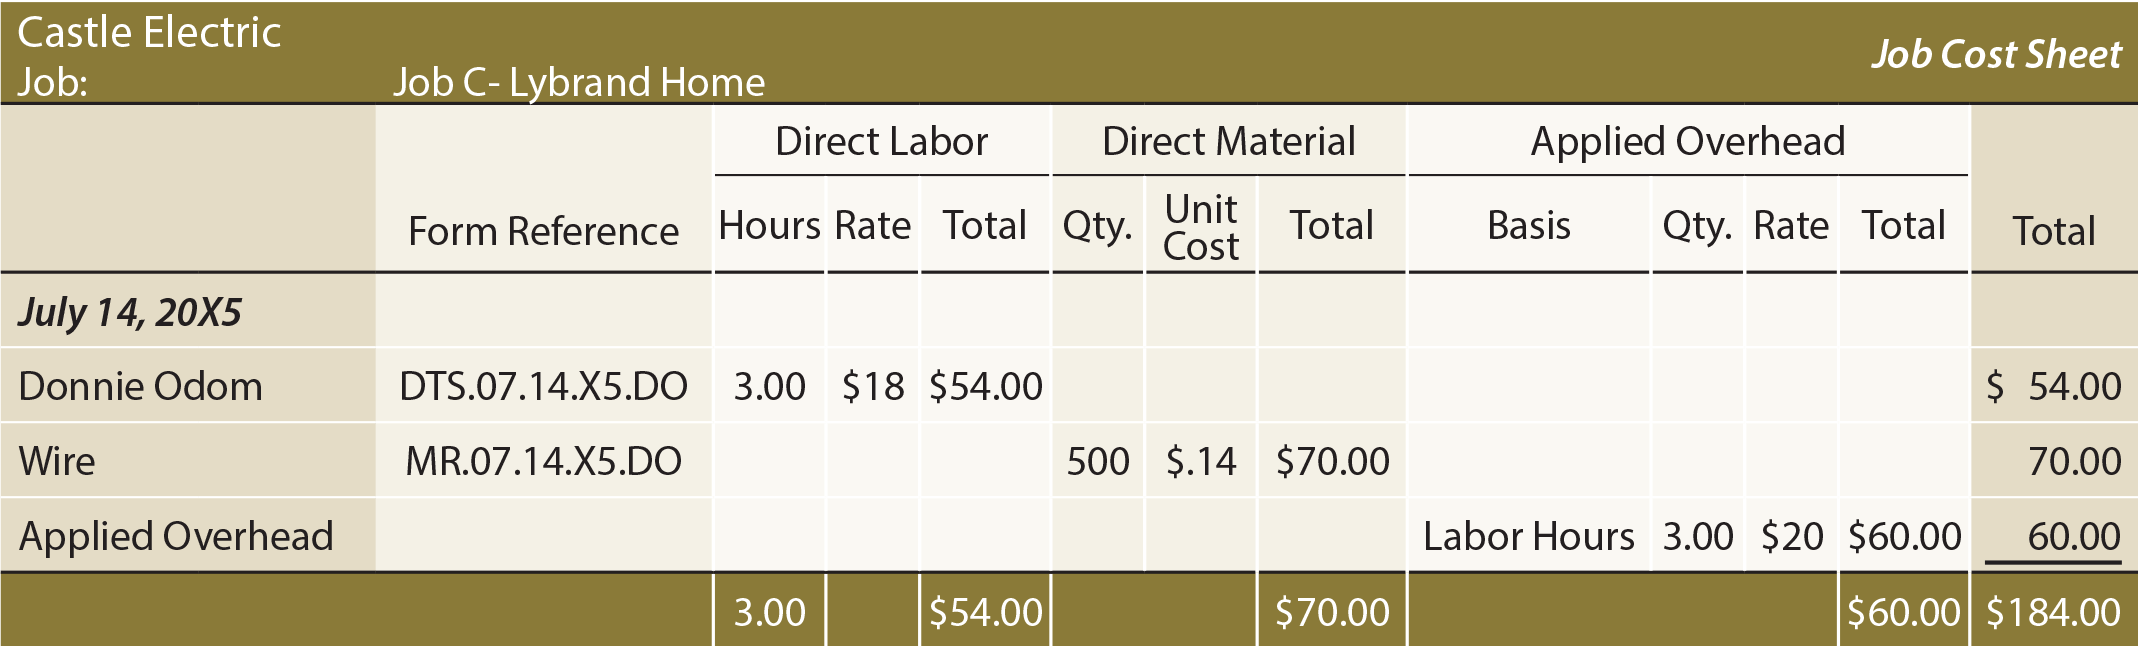 Job Costing Sheet - Job C 